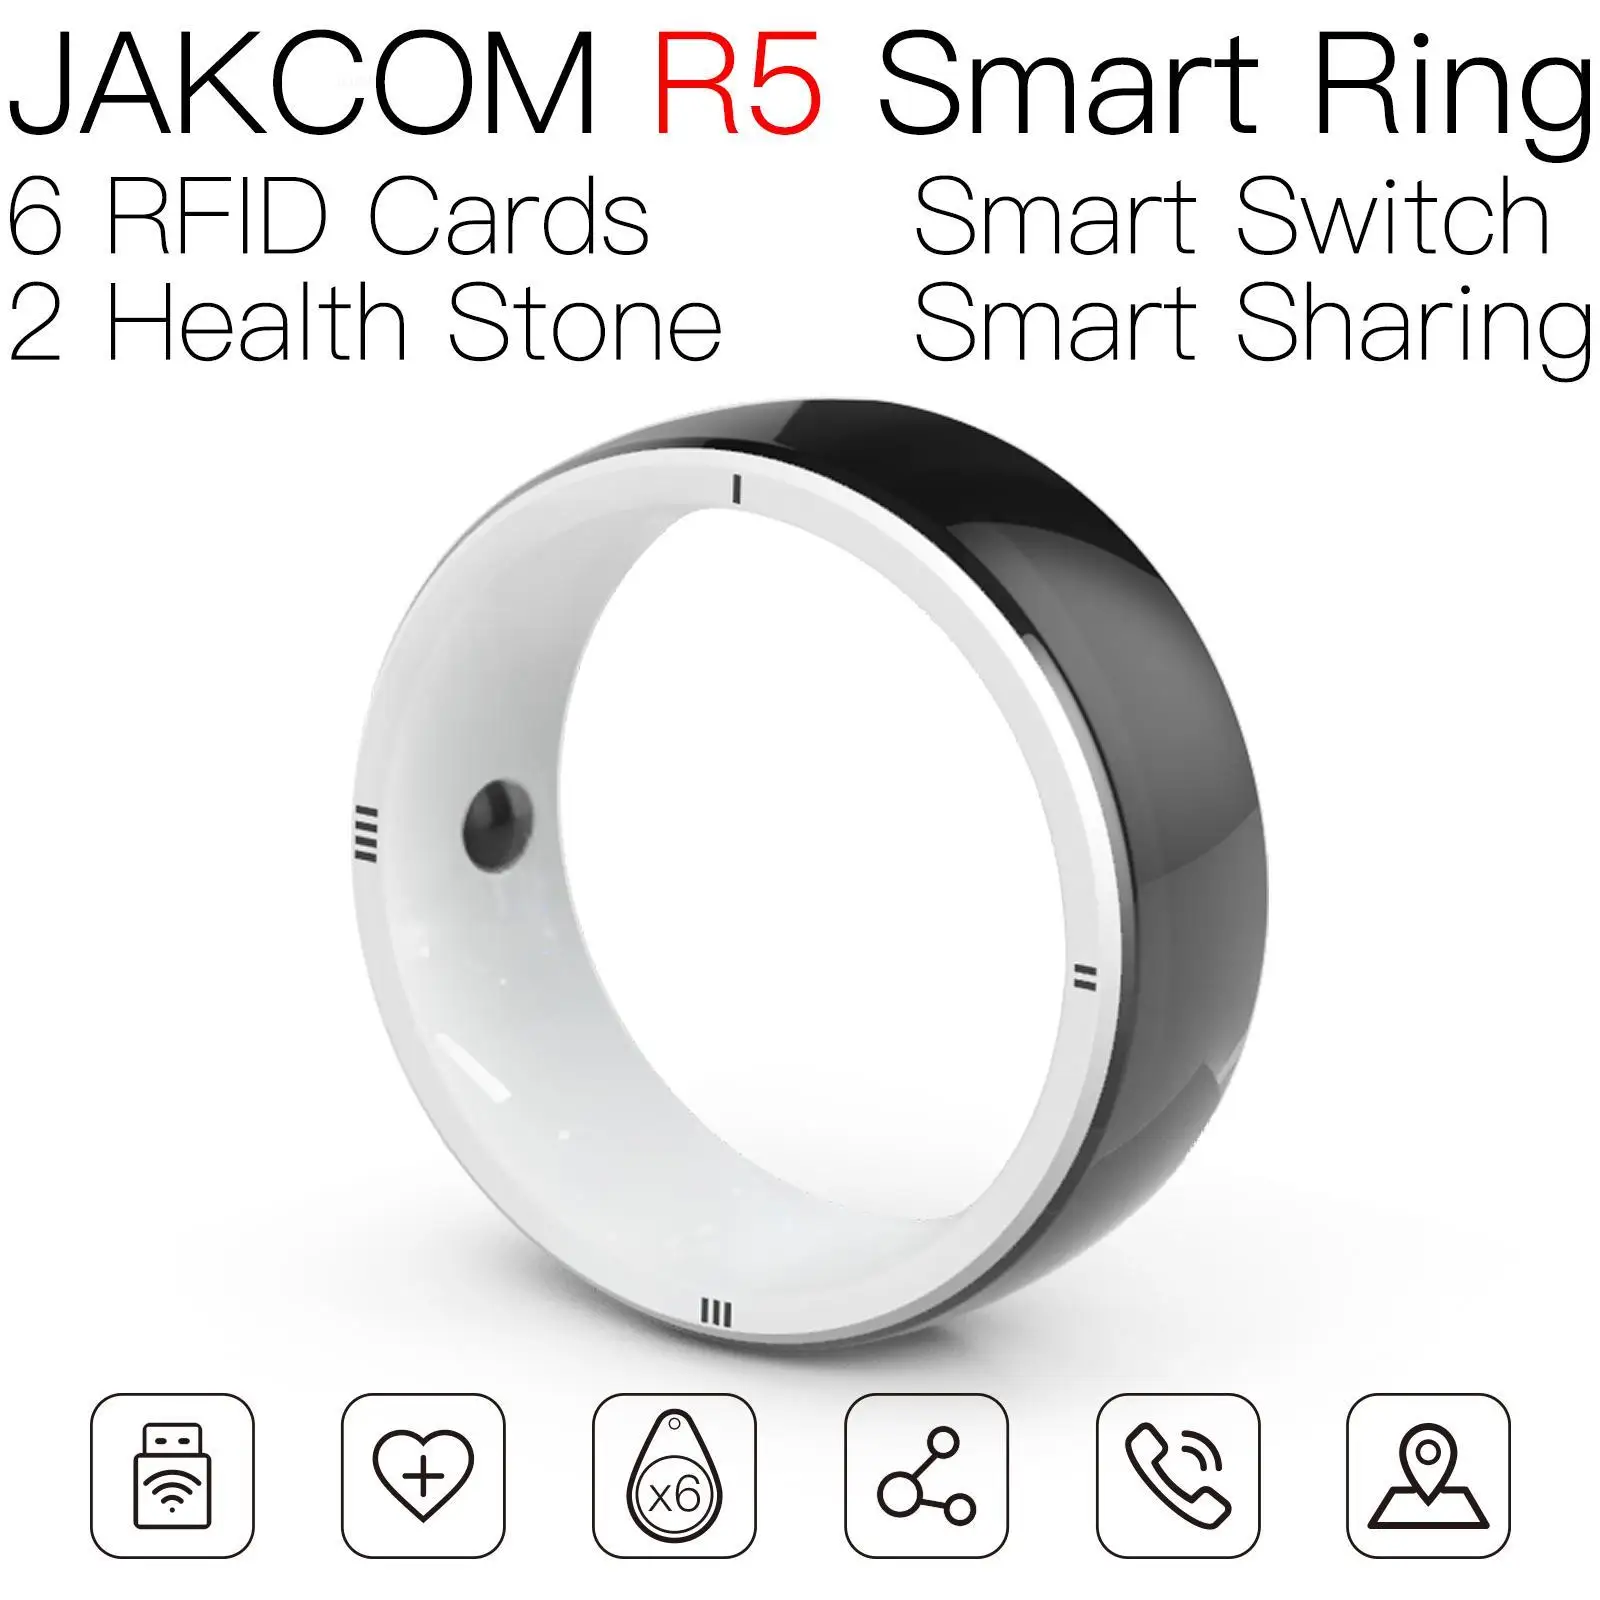 

JAKCOM R5 Smart Ring better than tags pets lots ring nfc card t5577 50pcs 125khz rfid writable 5577 coin fix